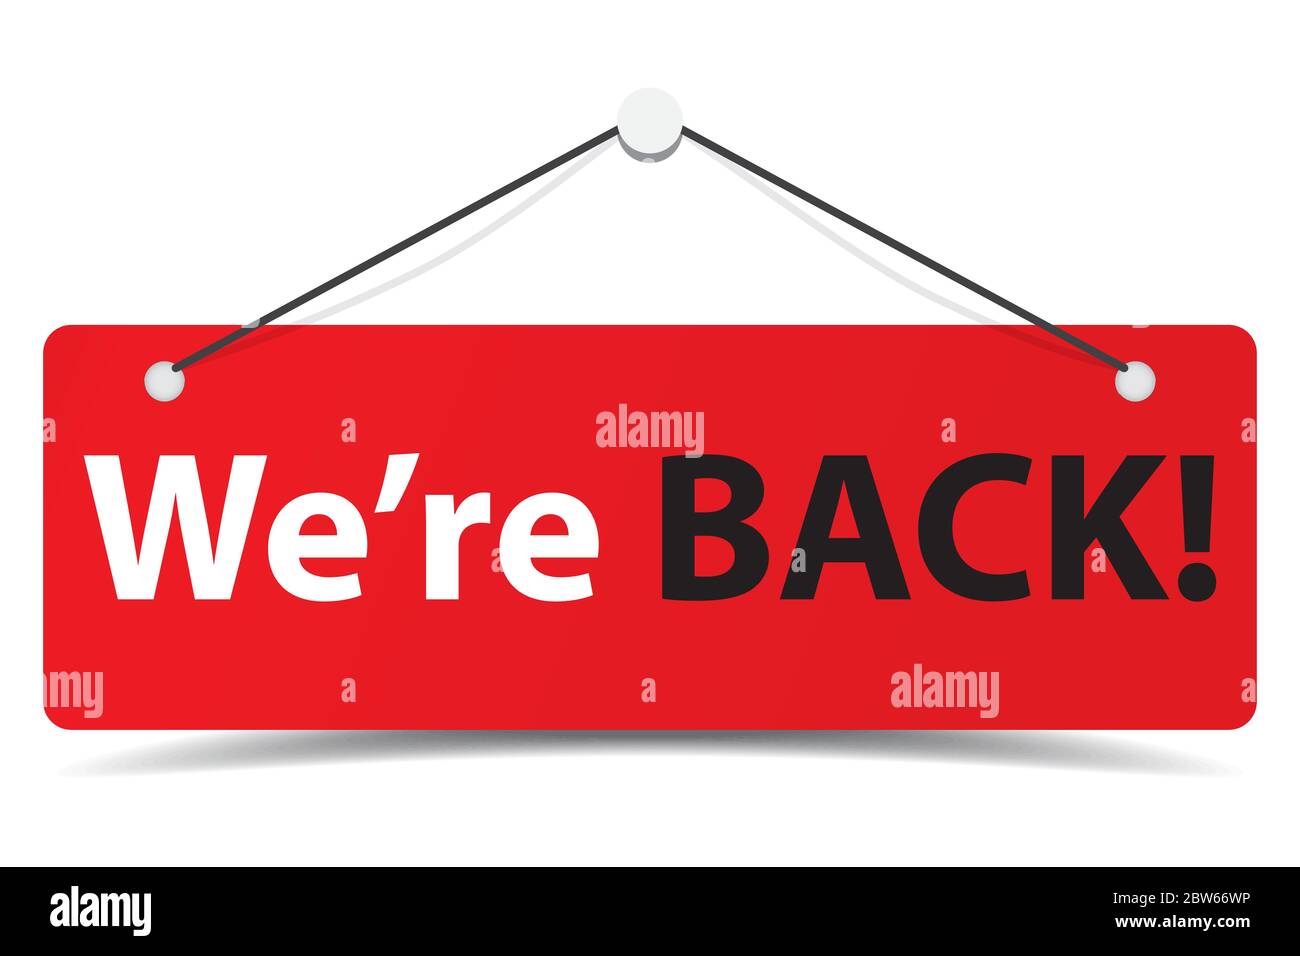 Business "we're back" door signage for unlock marketing promotion Premium vector design eps 10. Stock Vector